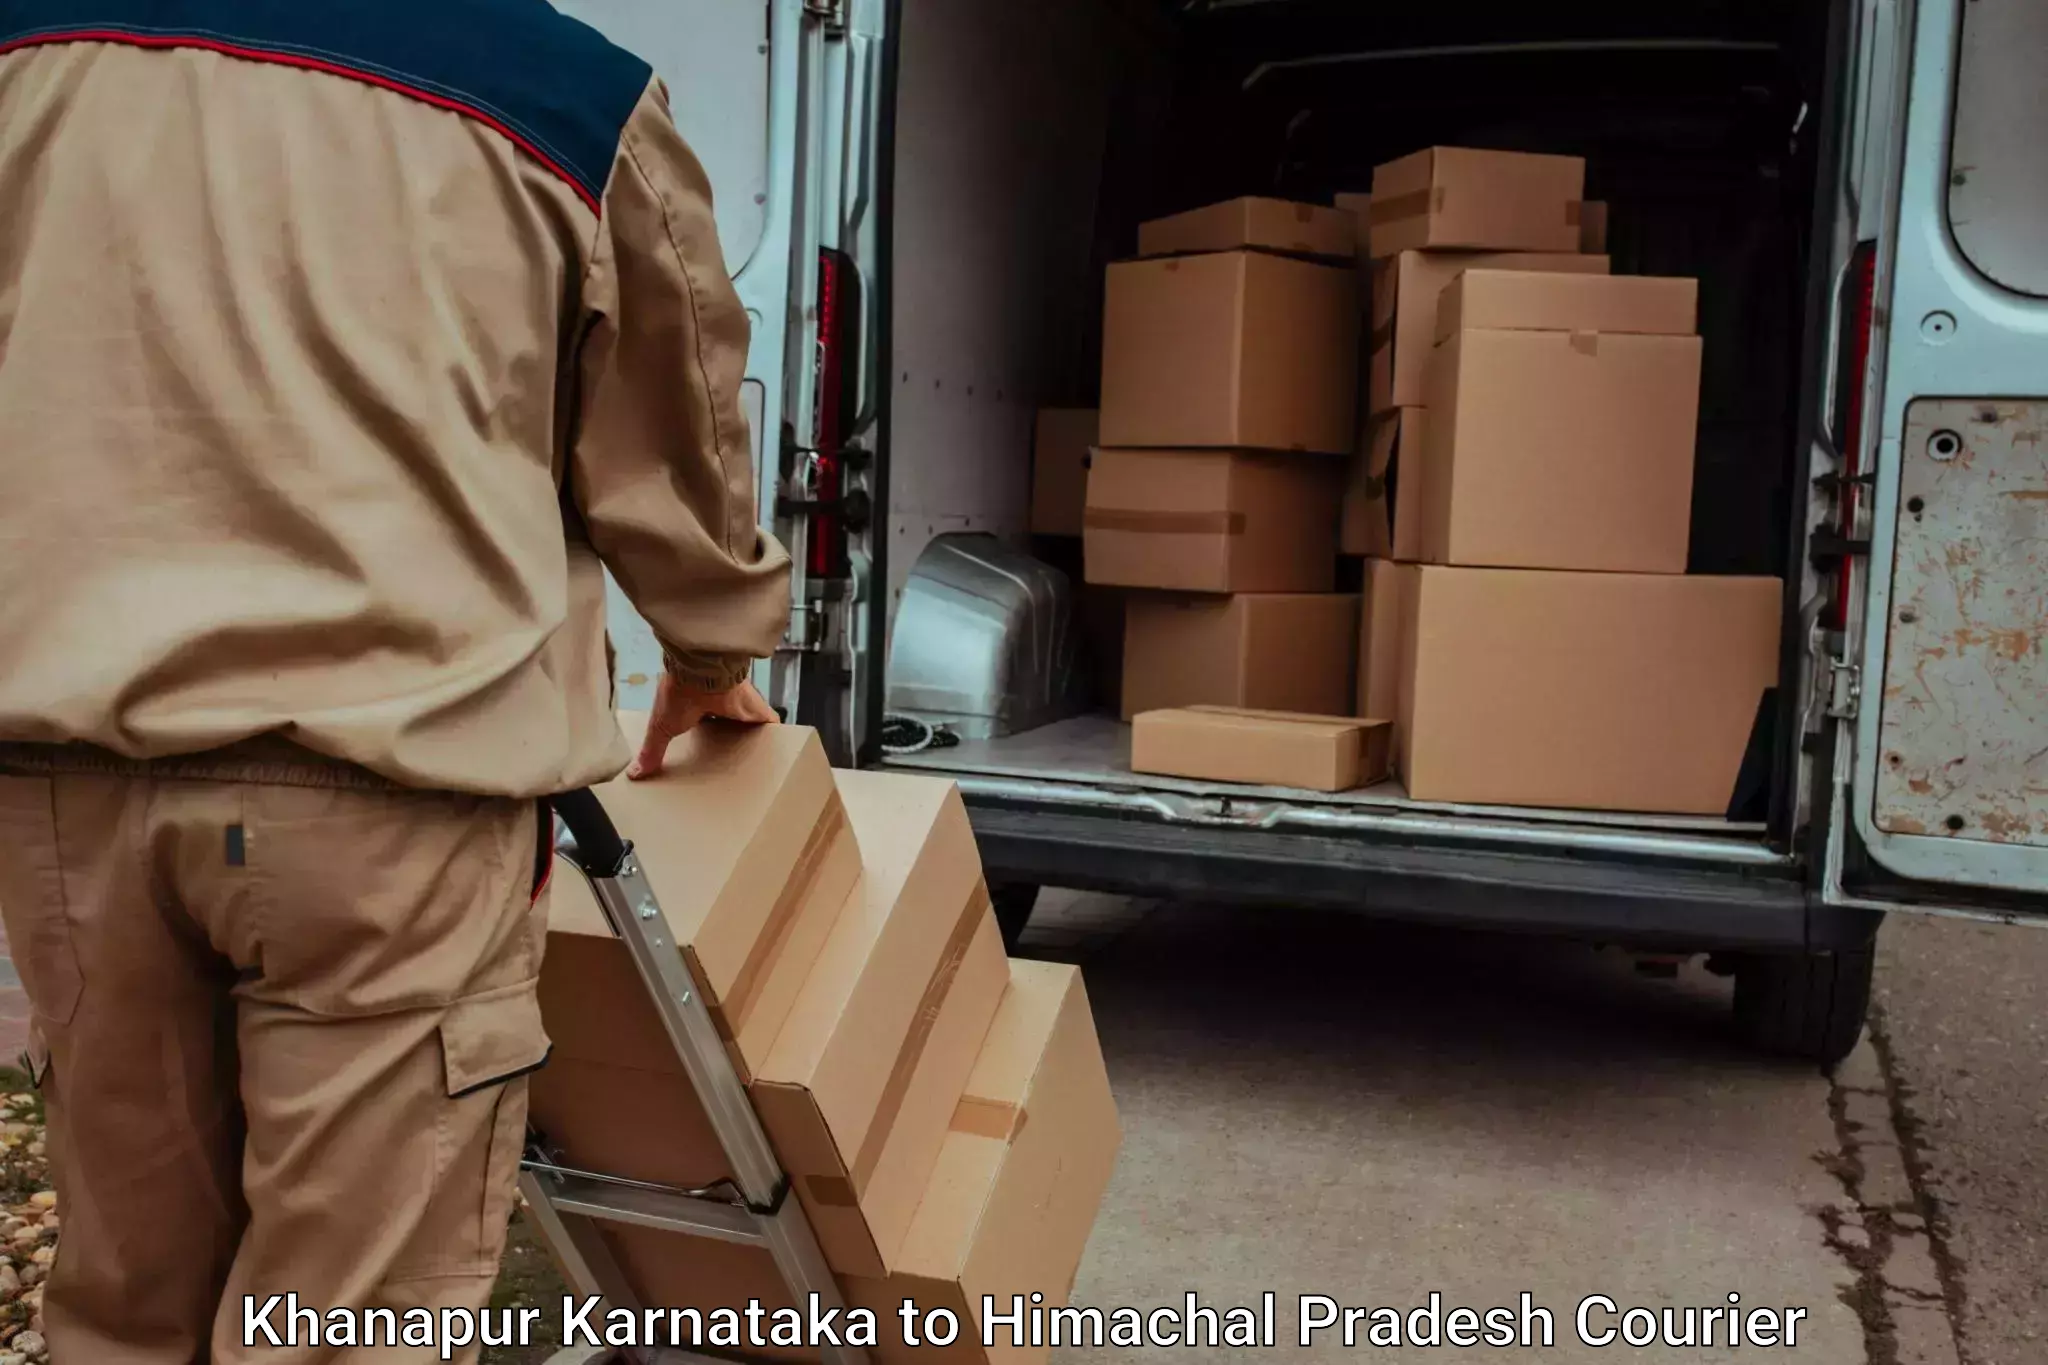 Baggage transport services Khanapur Karnataka to Indora